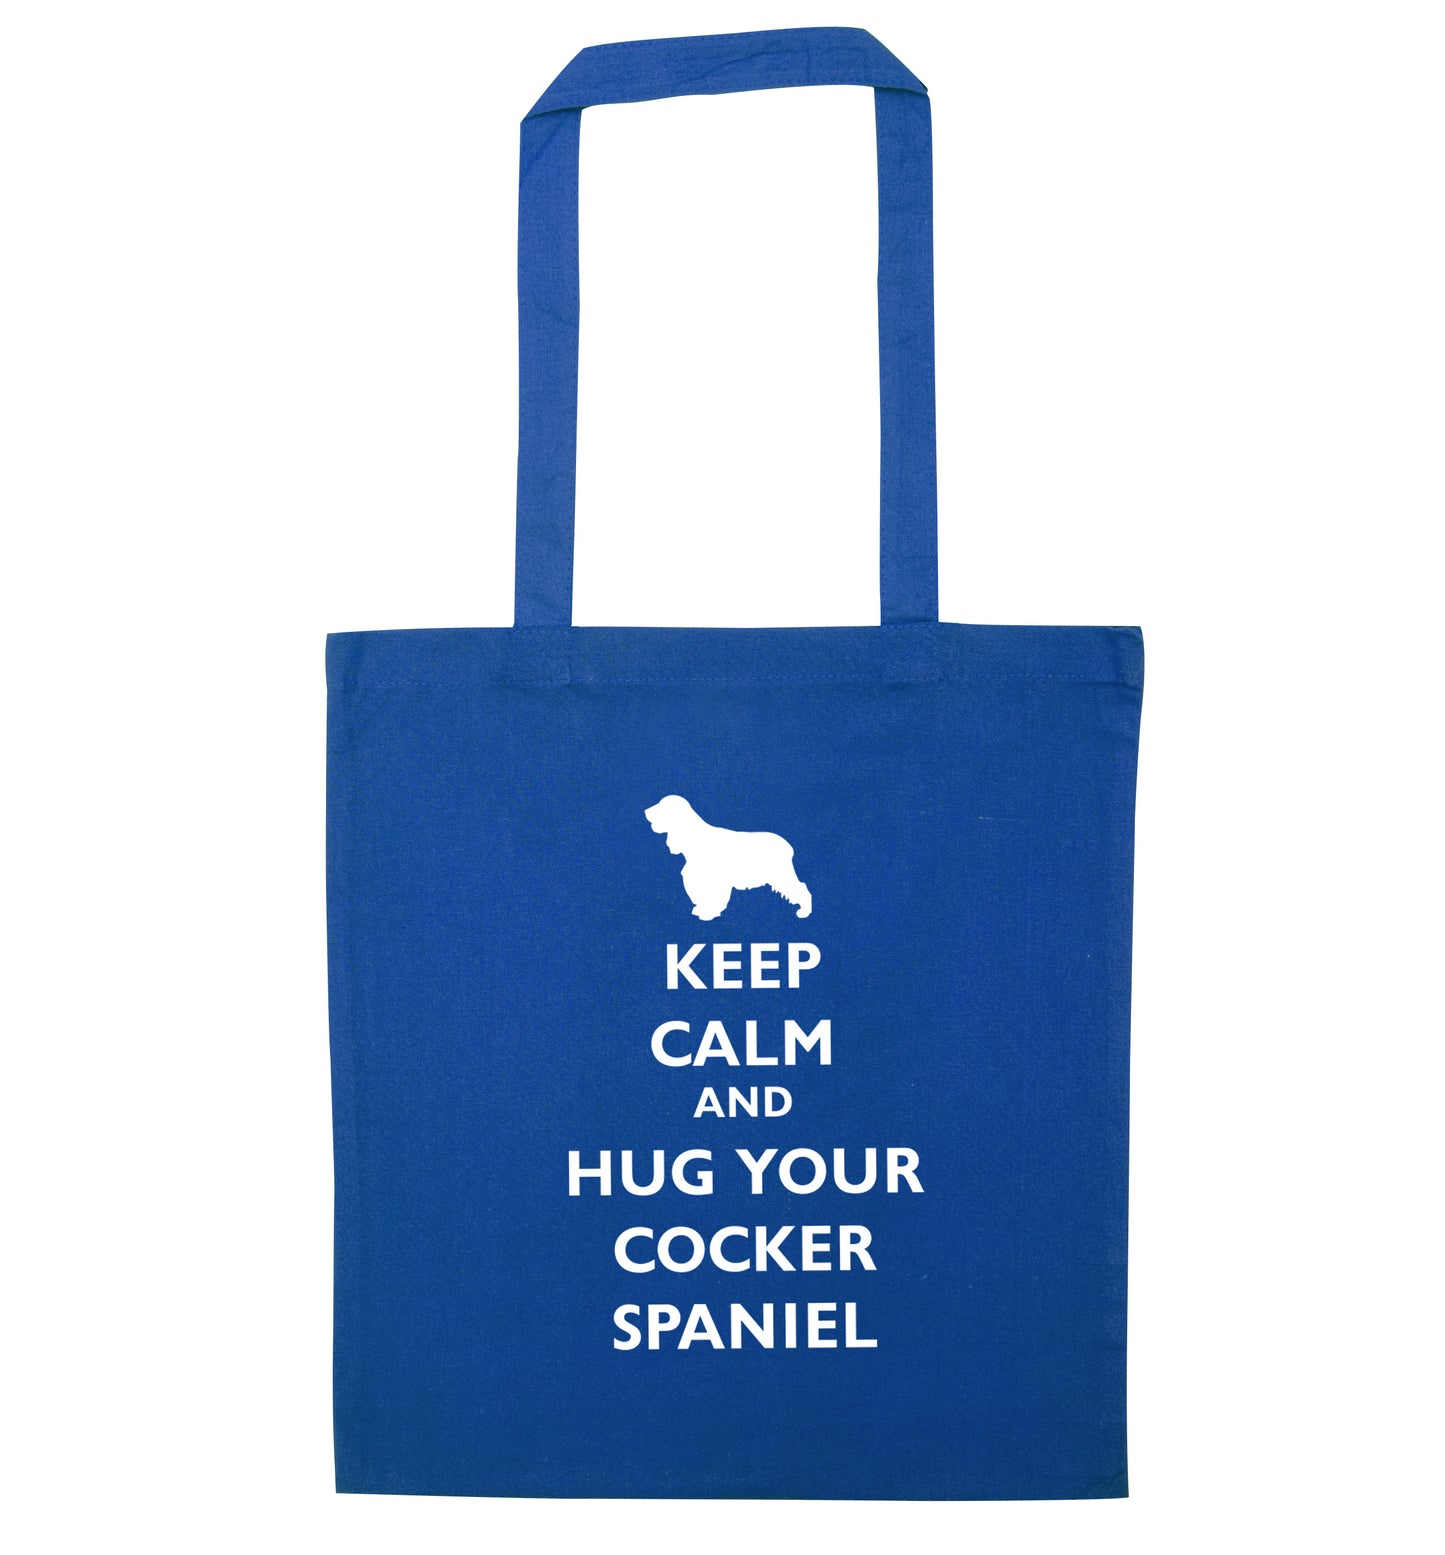 Keep calm and hug your cocker spaniel blue tote bag